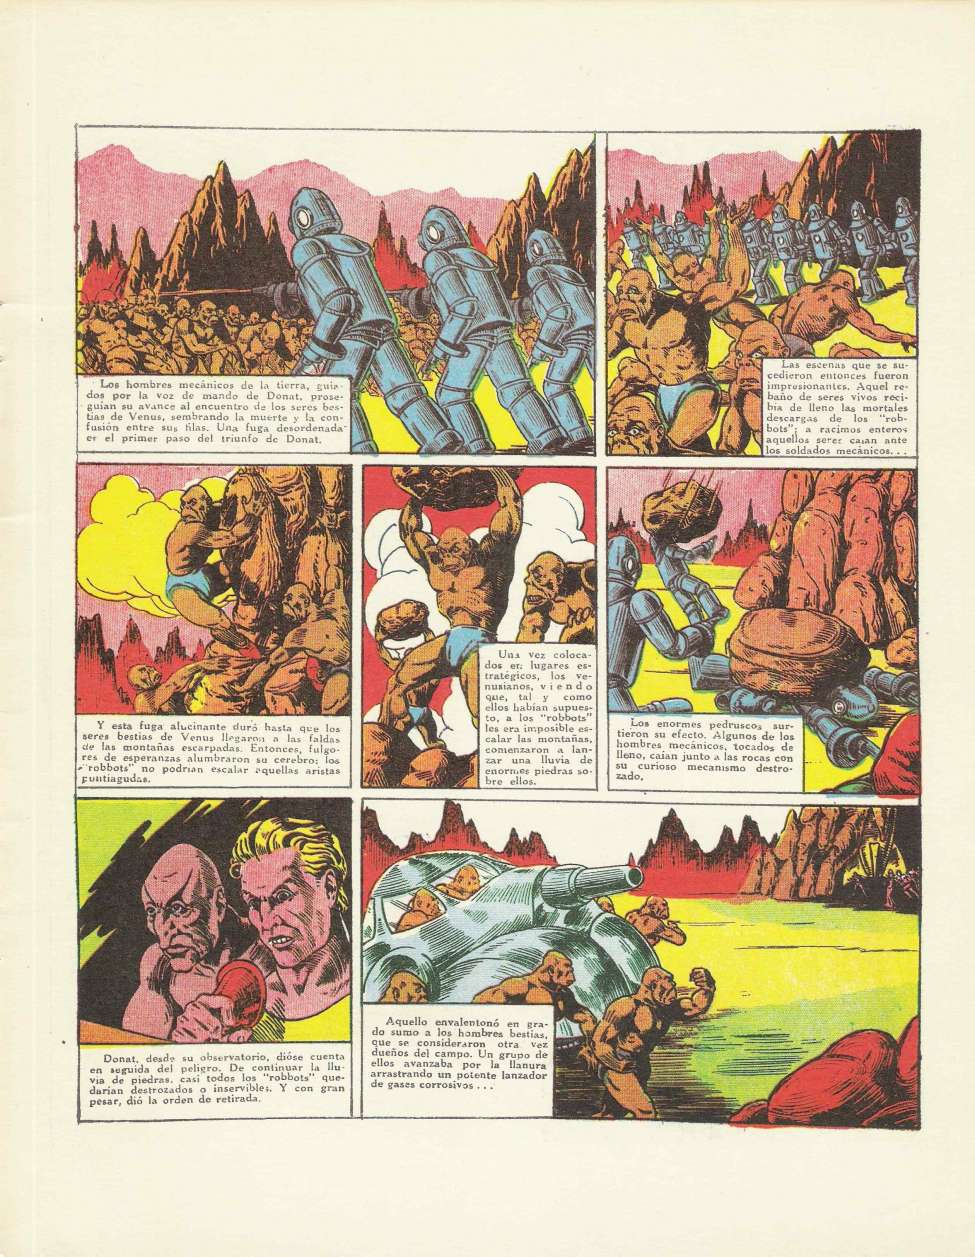 Comic Book Cover For Aventuras ilustradas 2 - El universo en guerra